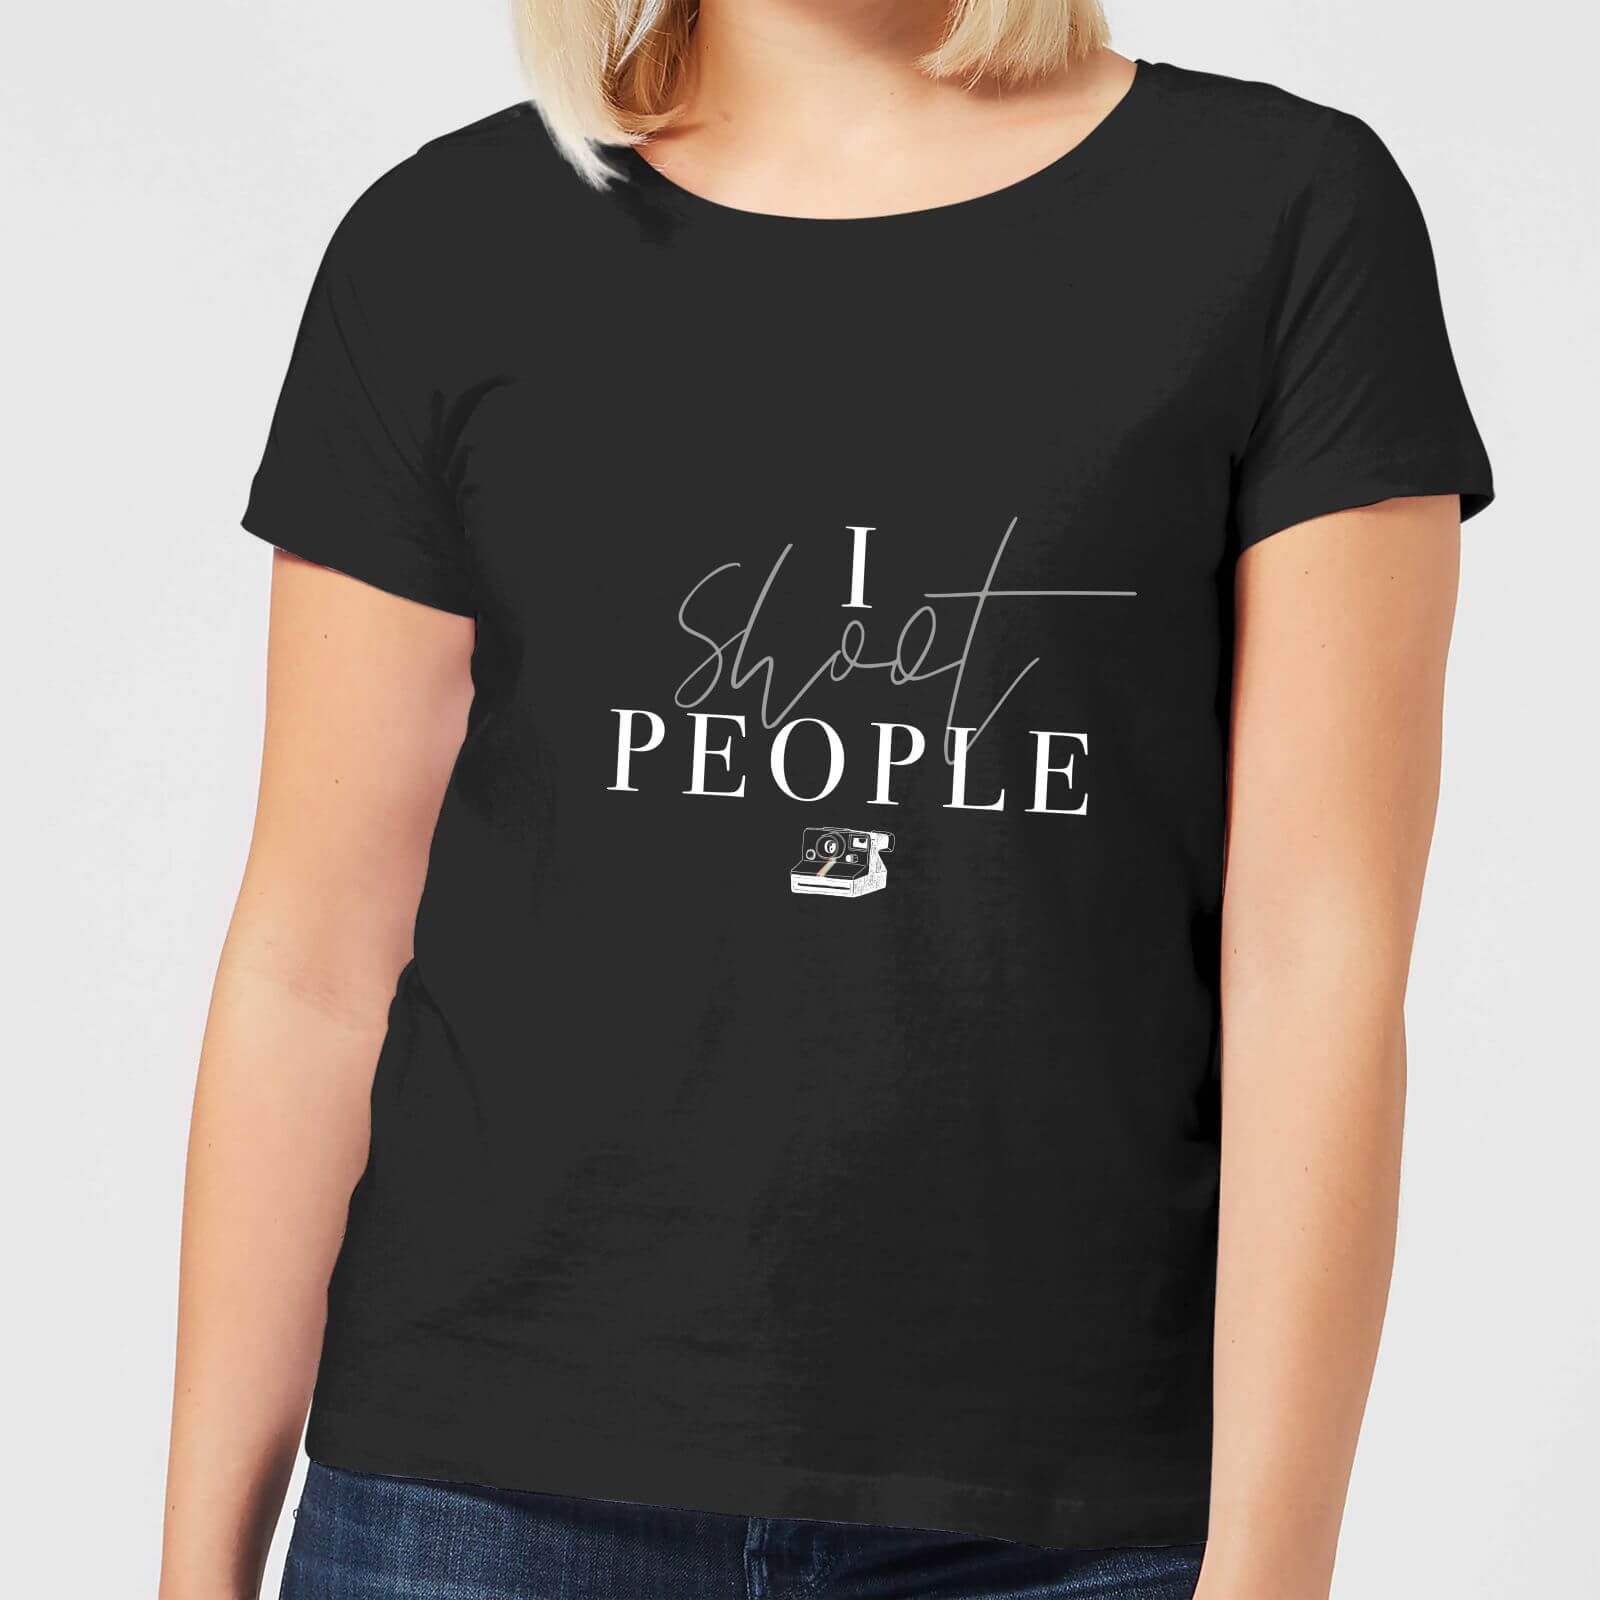 I Shoot People Women's T-Shirt - Black - 5XL - Black